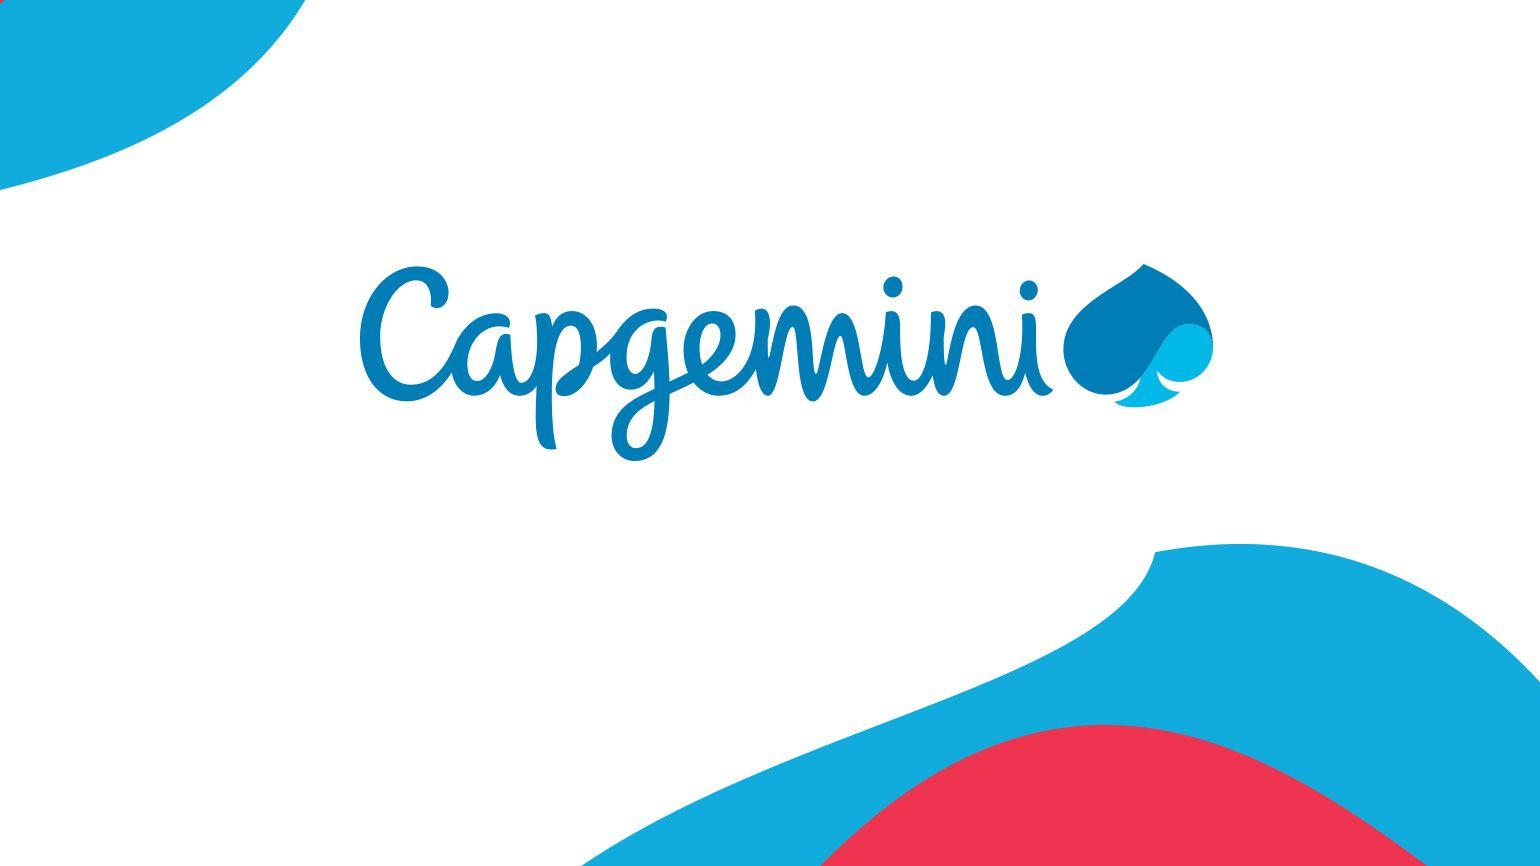 Capgemini Logo - Capgemini plans to appoint Carole Ferrand as Group Chief Financial